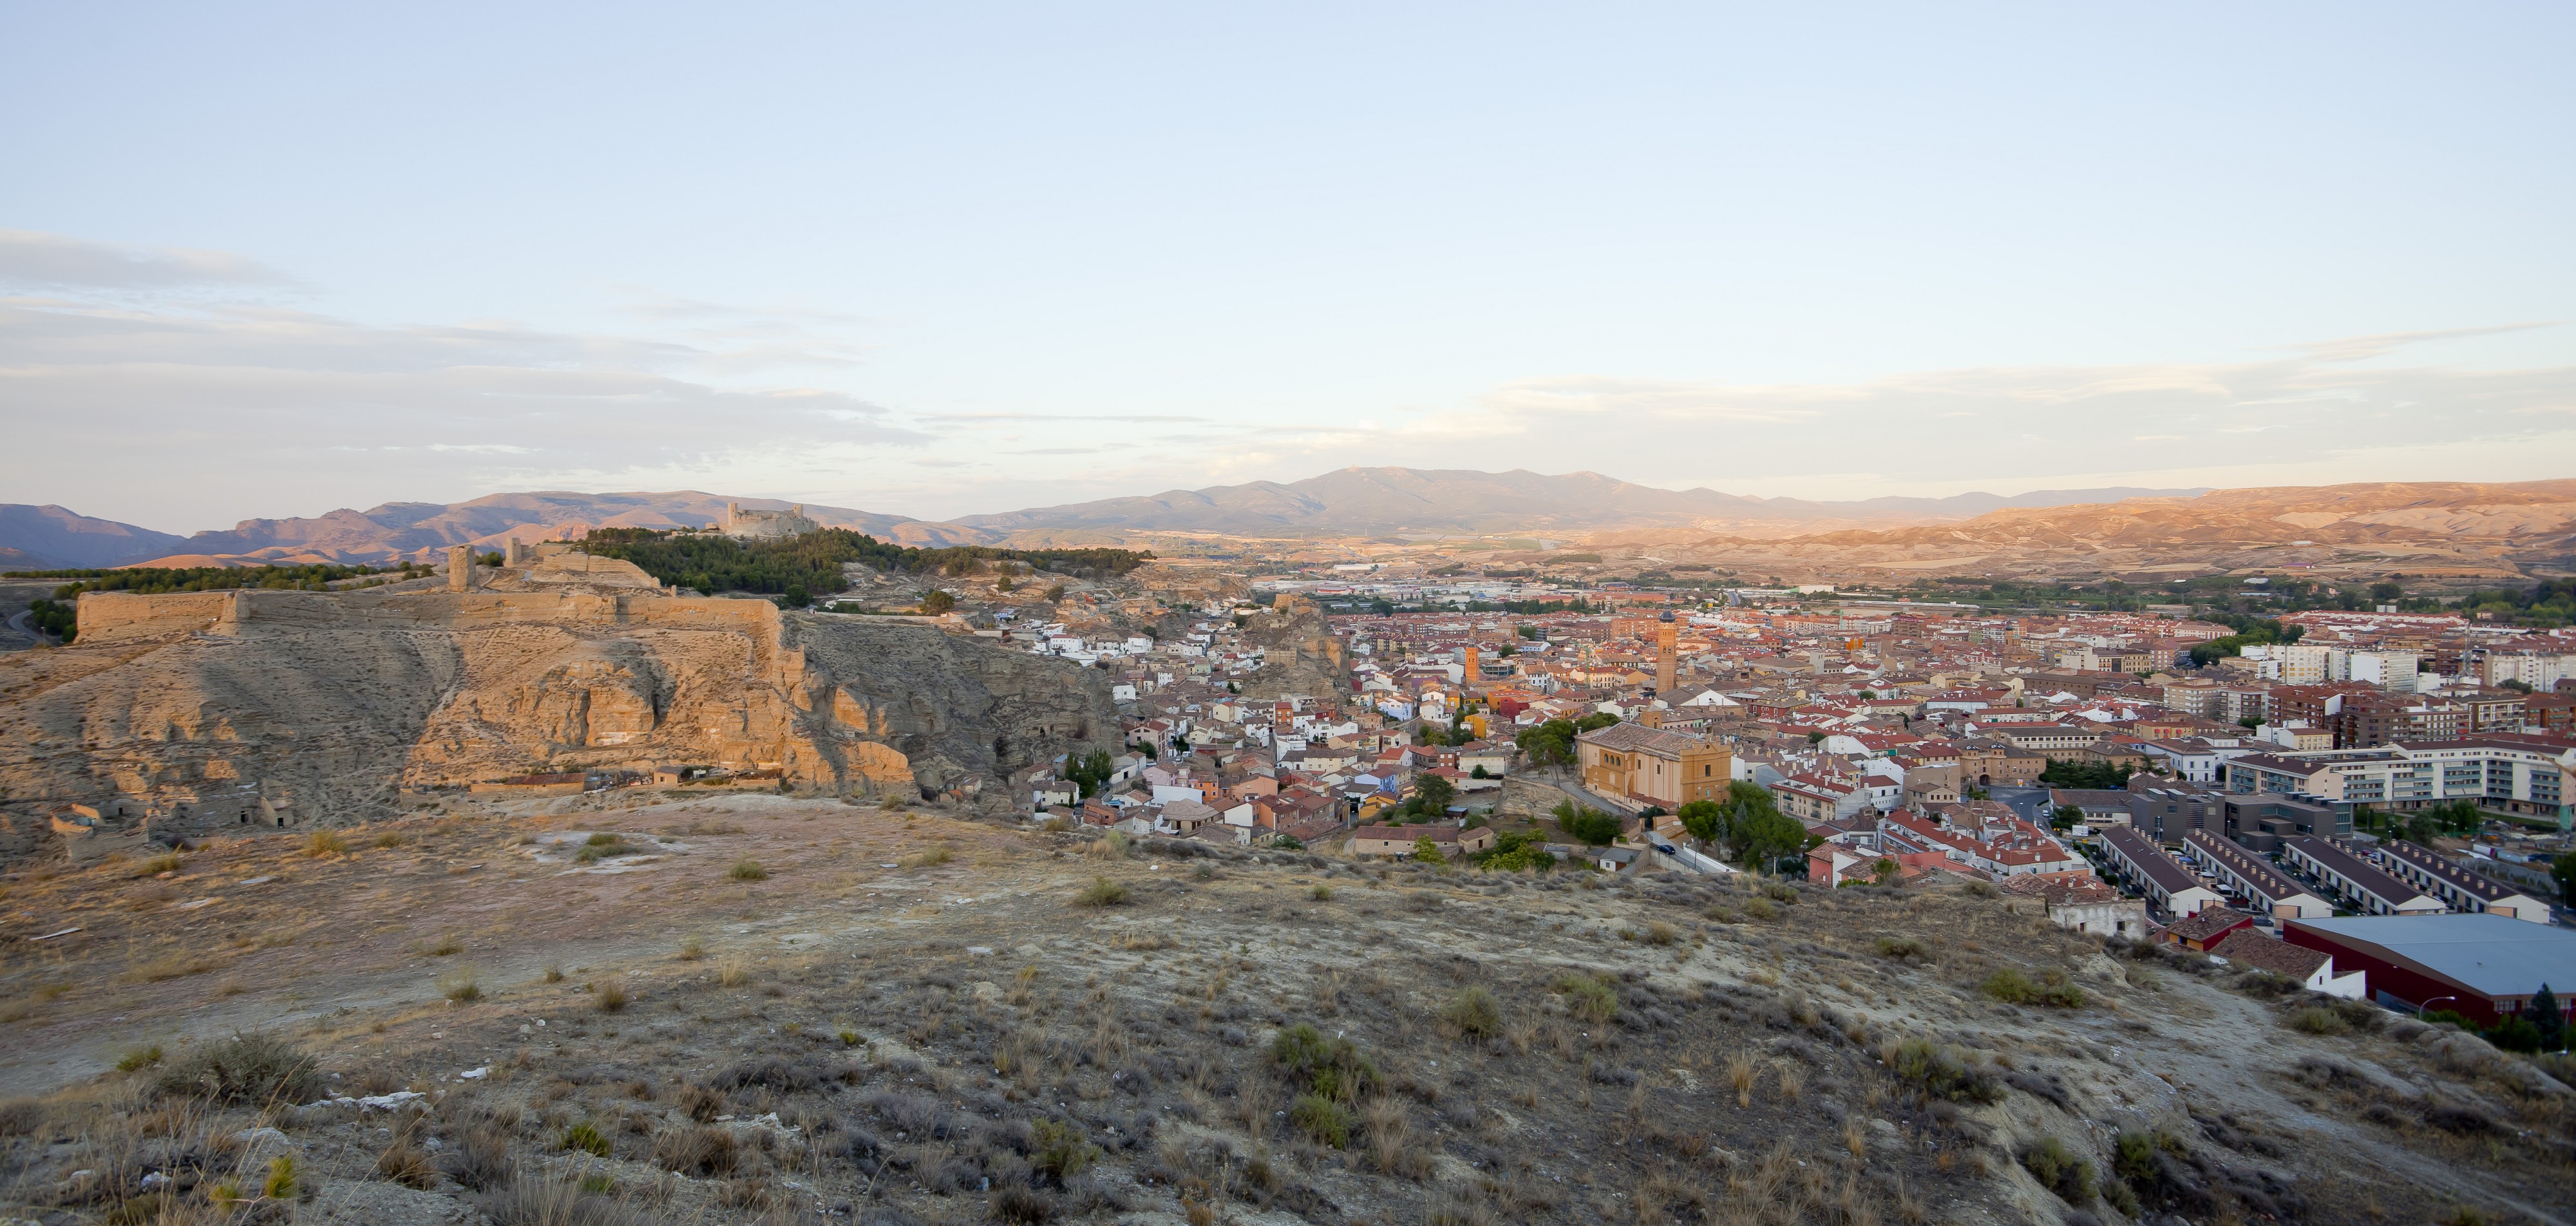 Vista de Calatayud desde San Roque, España, 2012-08-31, DD 01